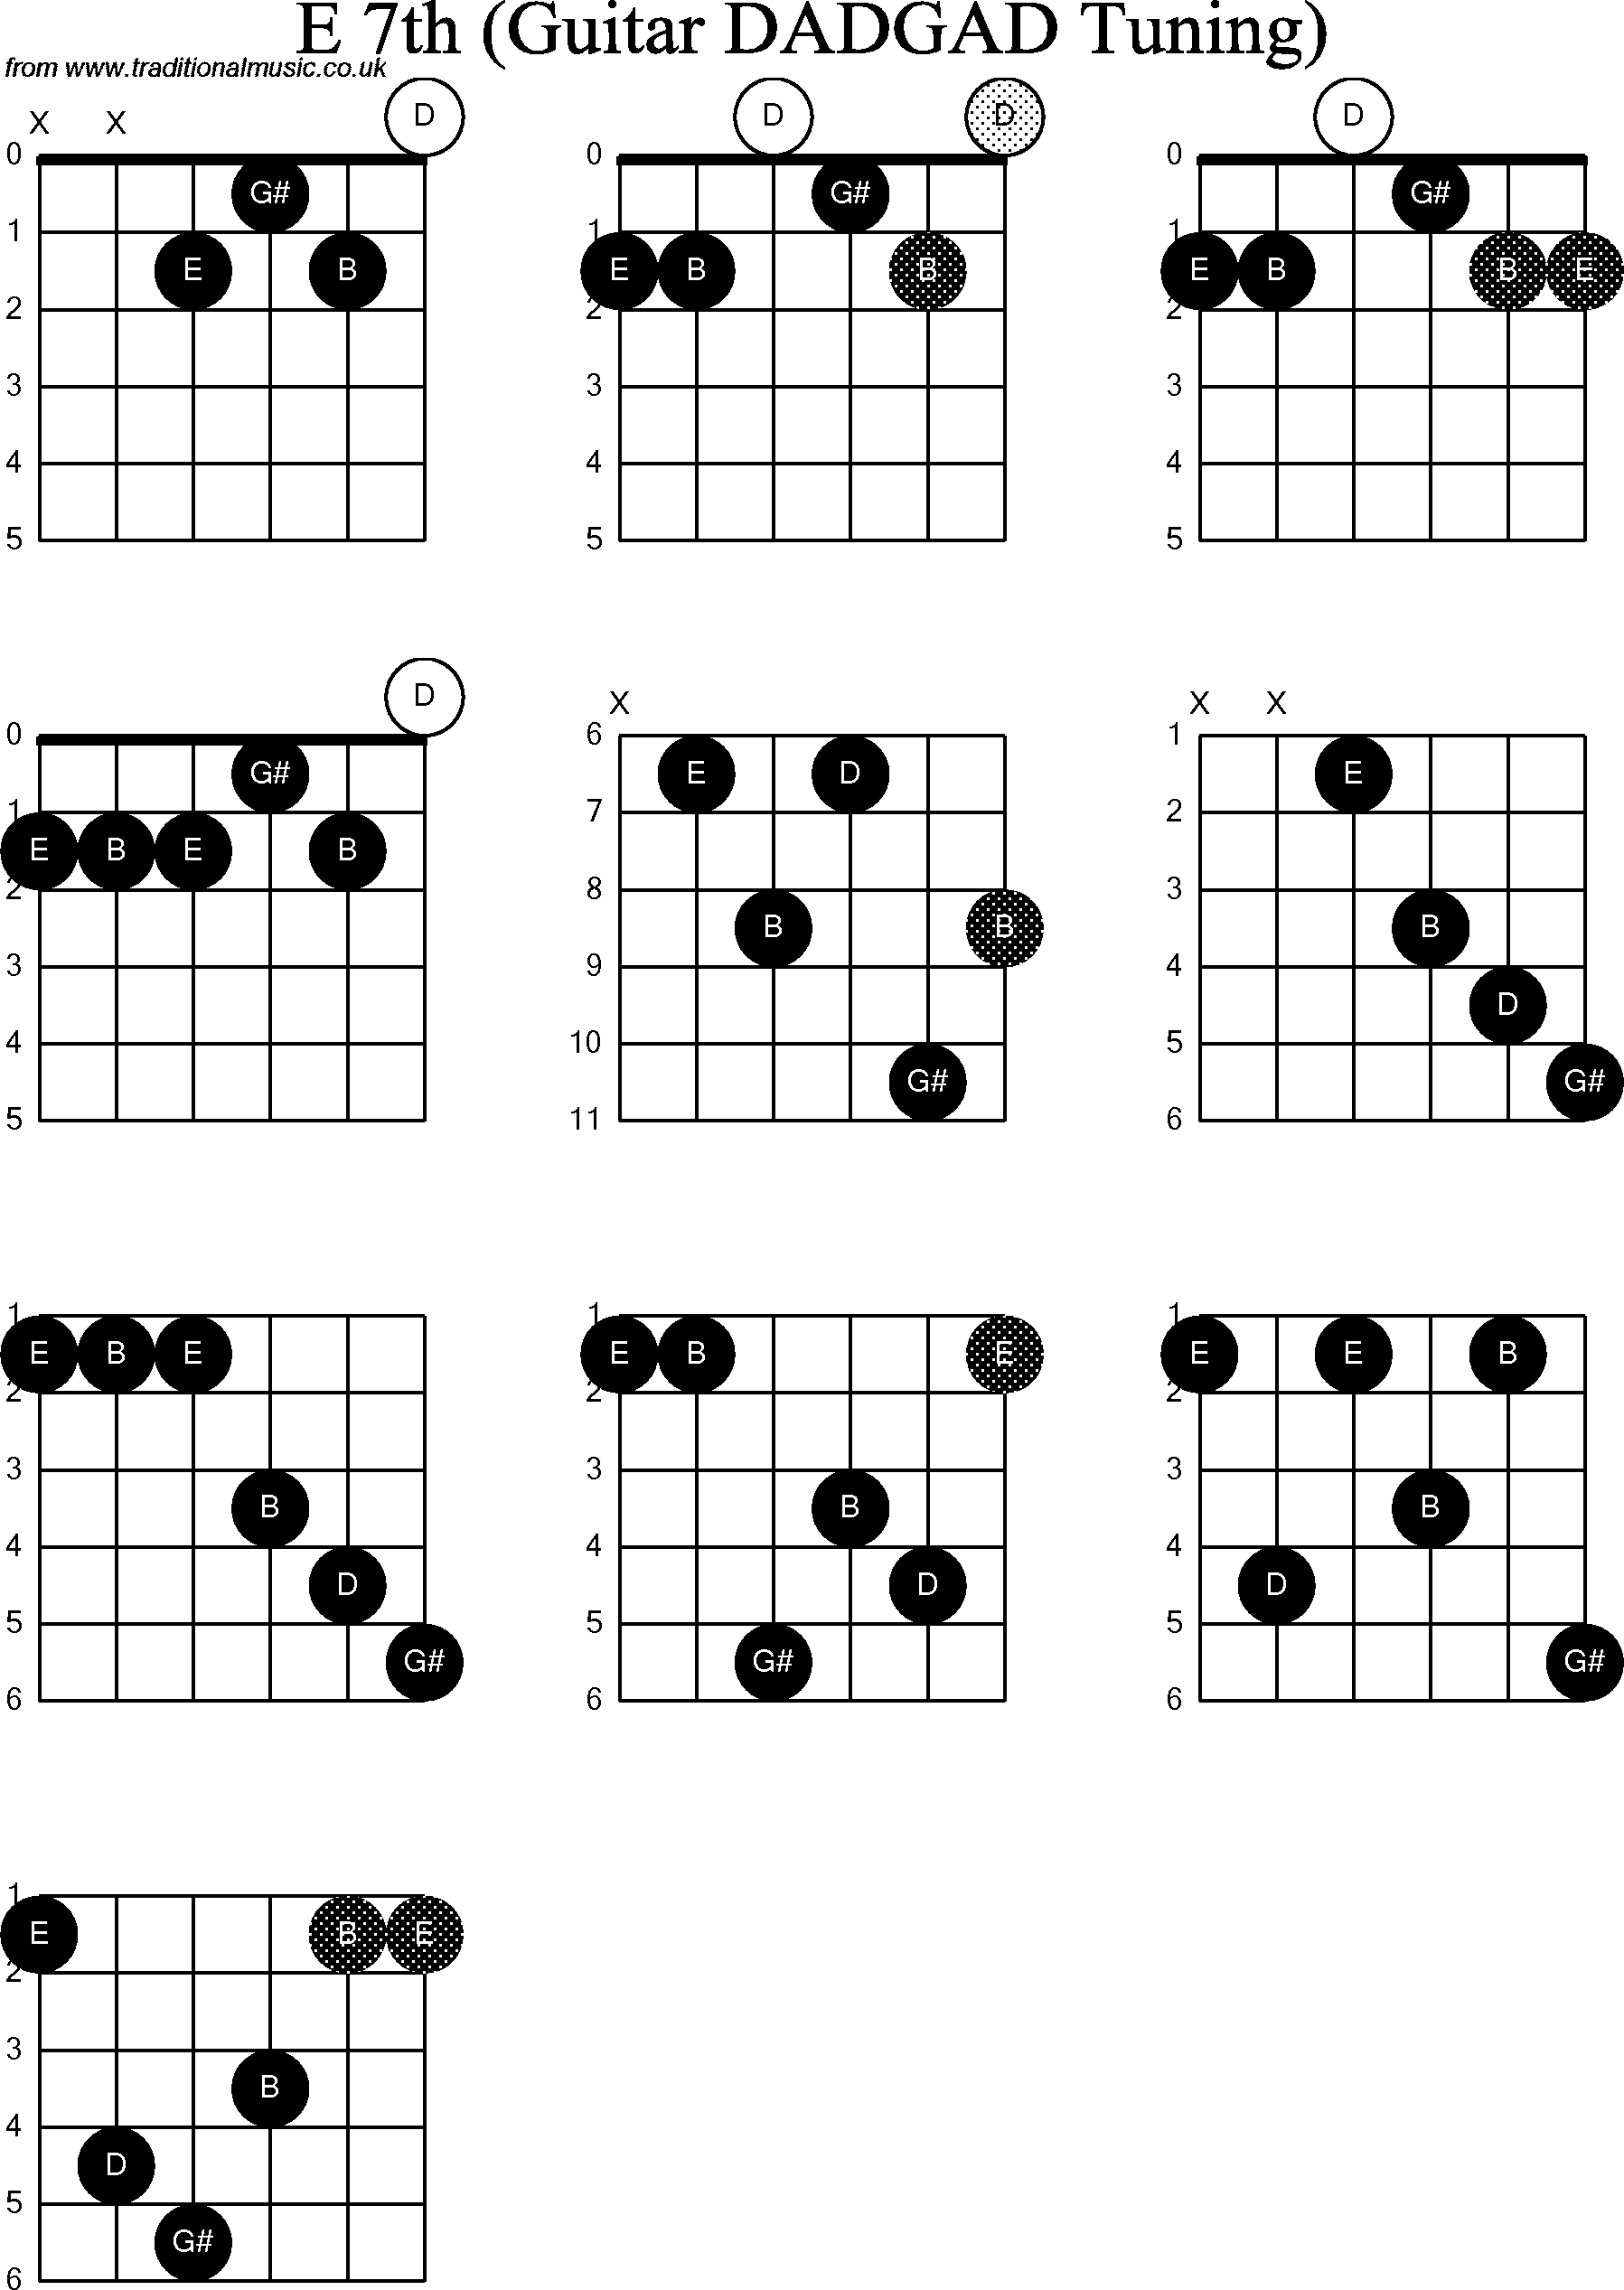 Chord Diagrams for D Modal Guitar(DADGAD), E7th